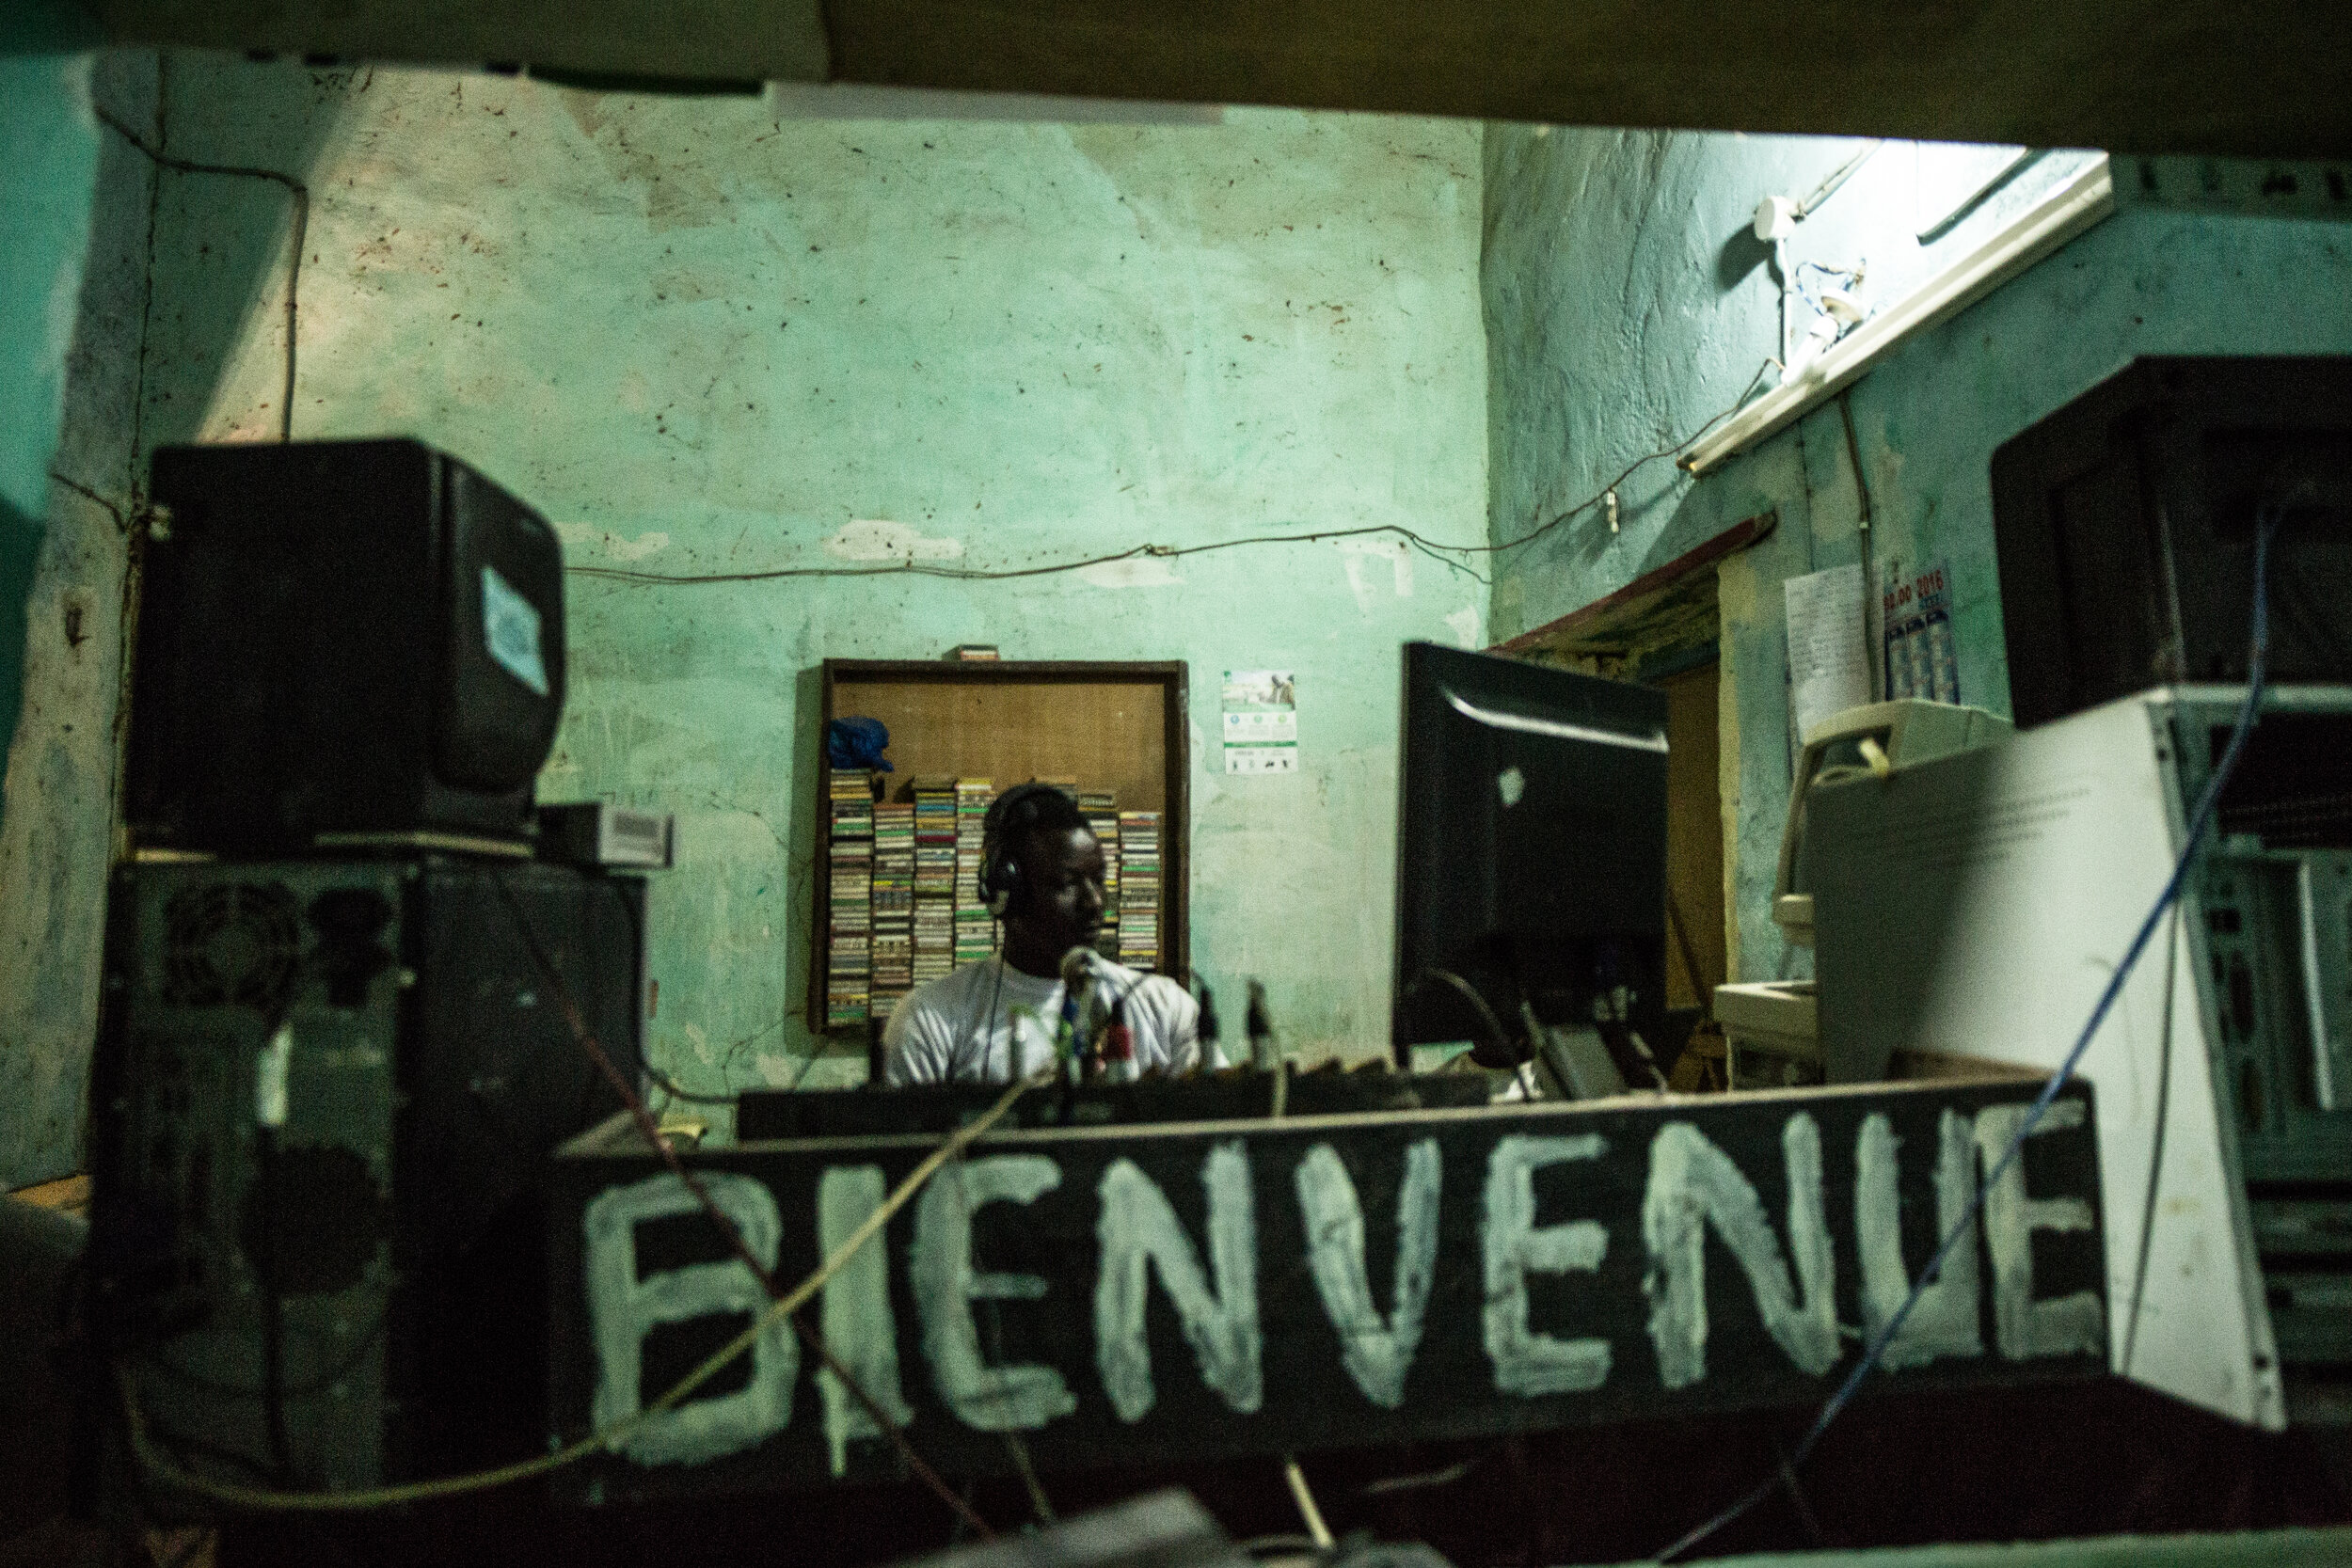  “Bienvenue” - Welcome to a radio station in Mopti, Mali, 2016 